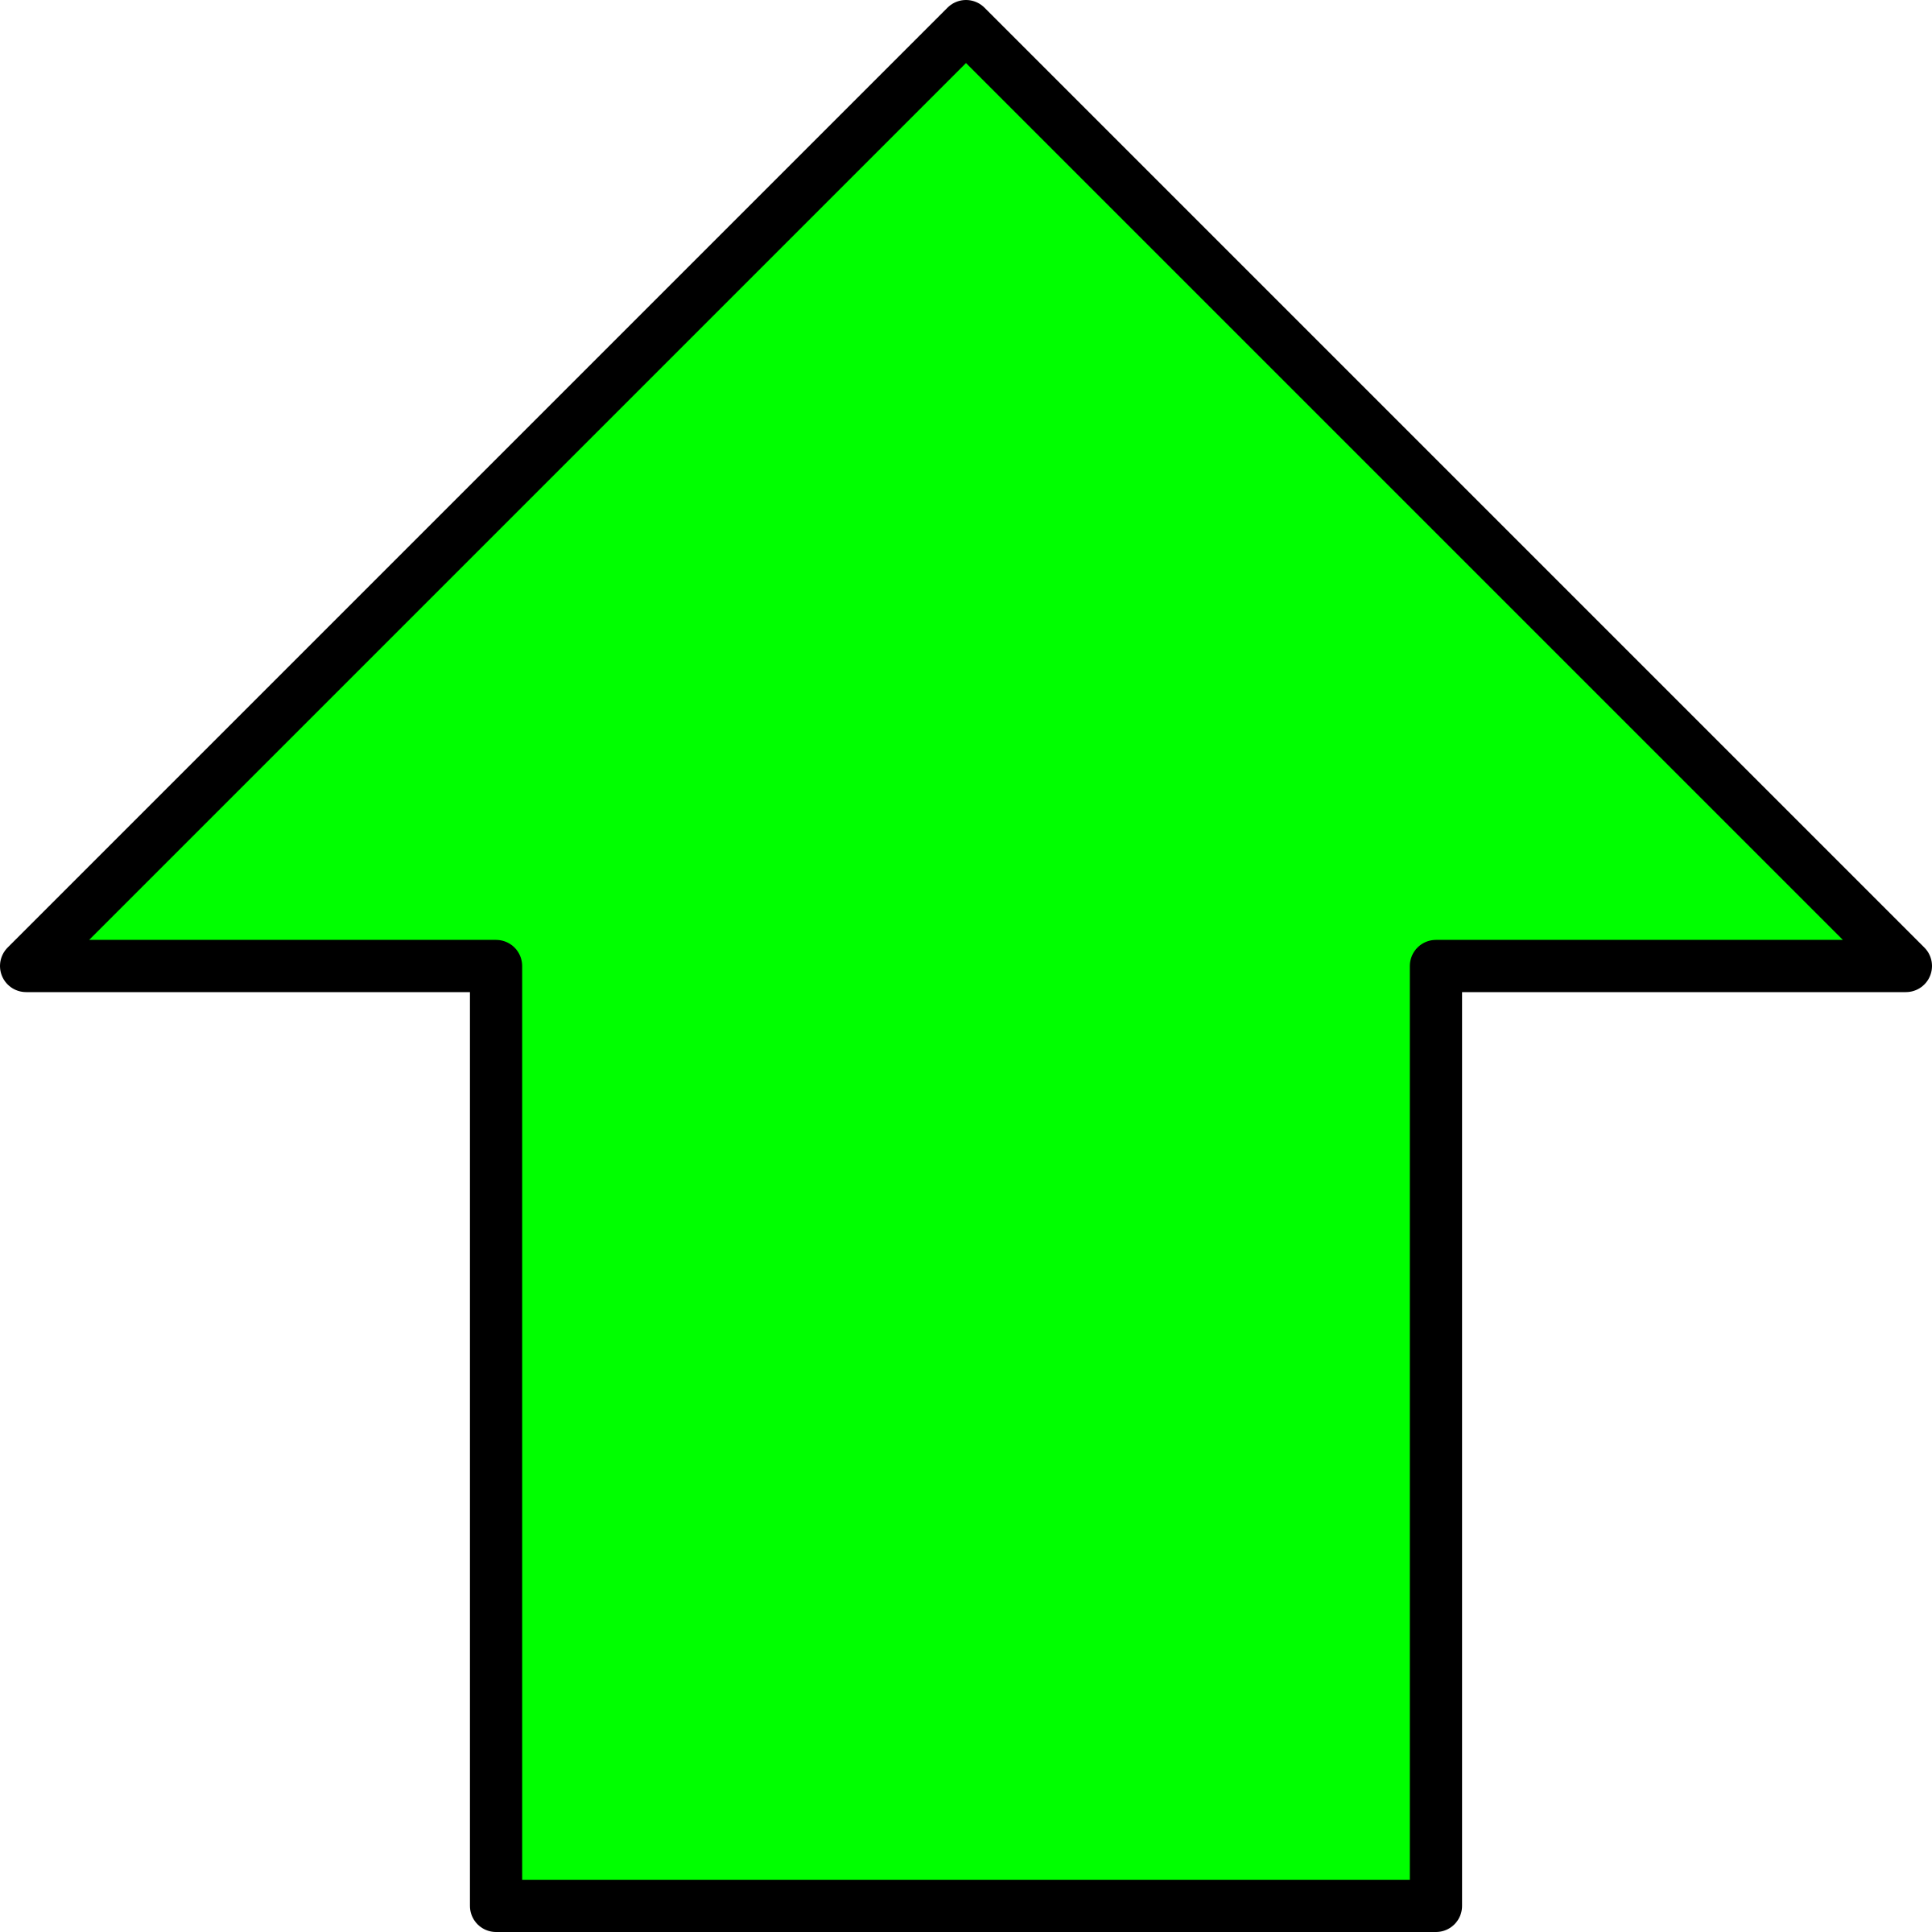 Clipart - Green up arrow